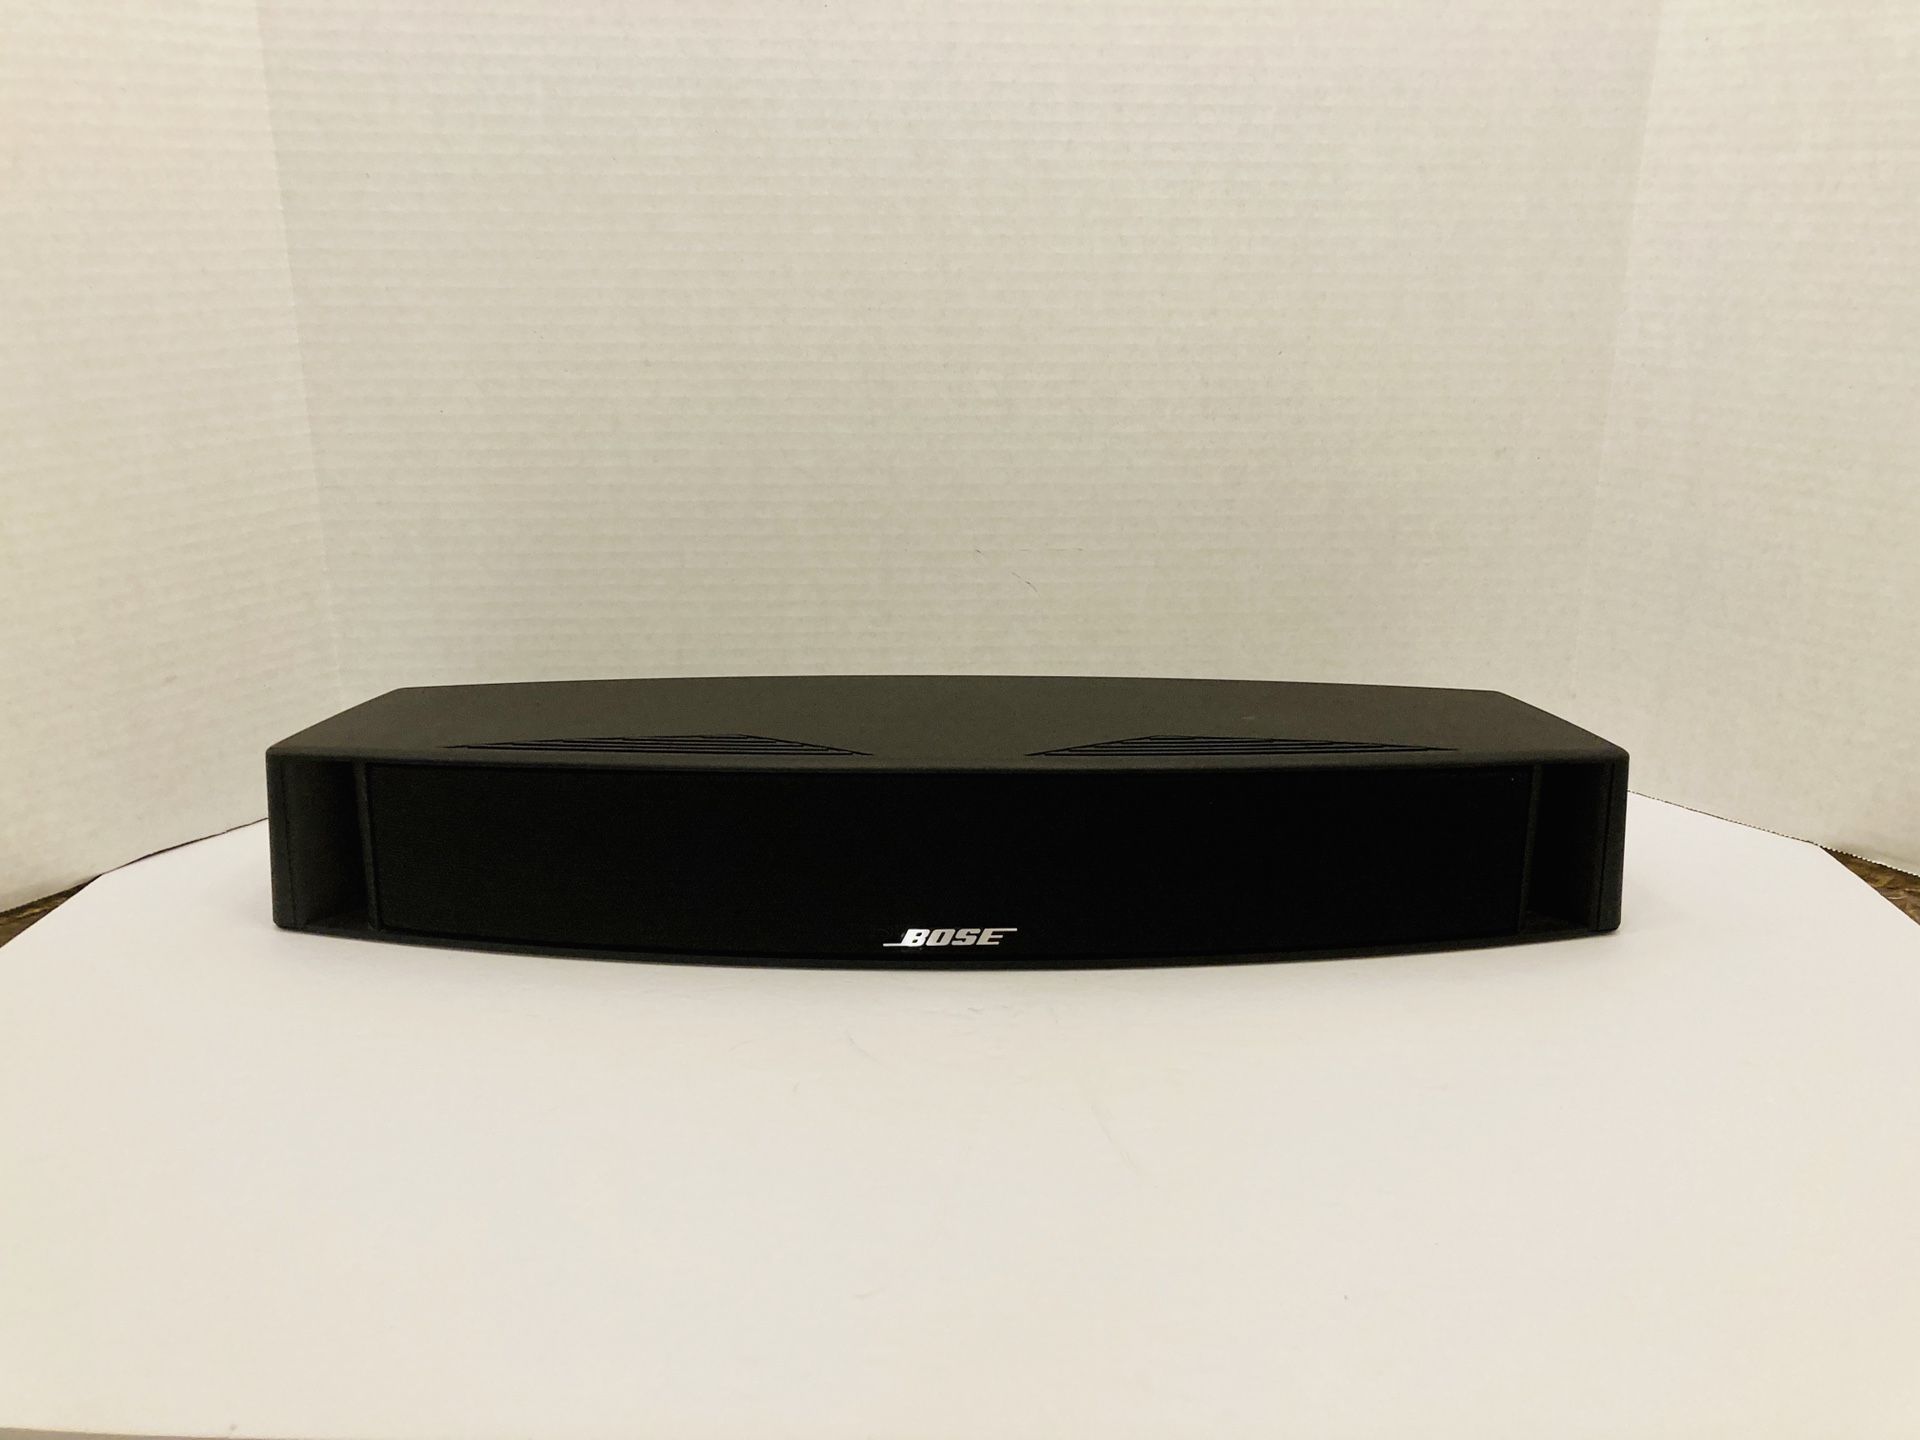 Bose VCS-10 Powerful Center Channel Speaker Like New